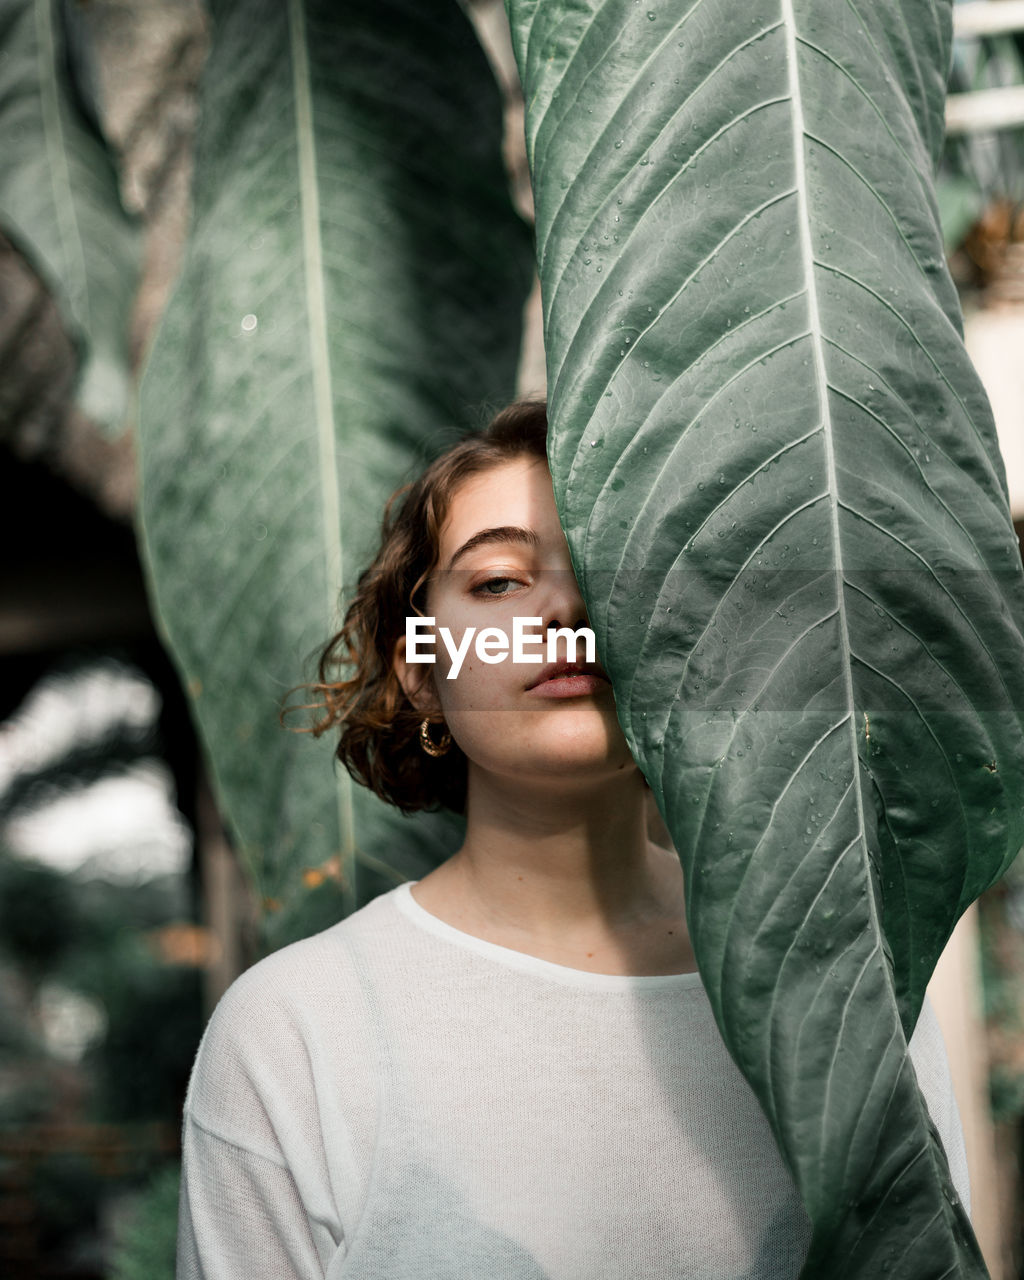 Portrait of woman by plants